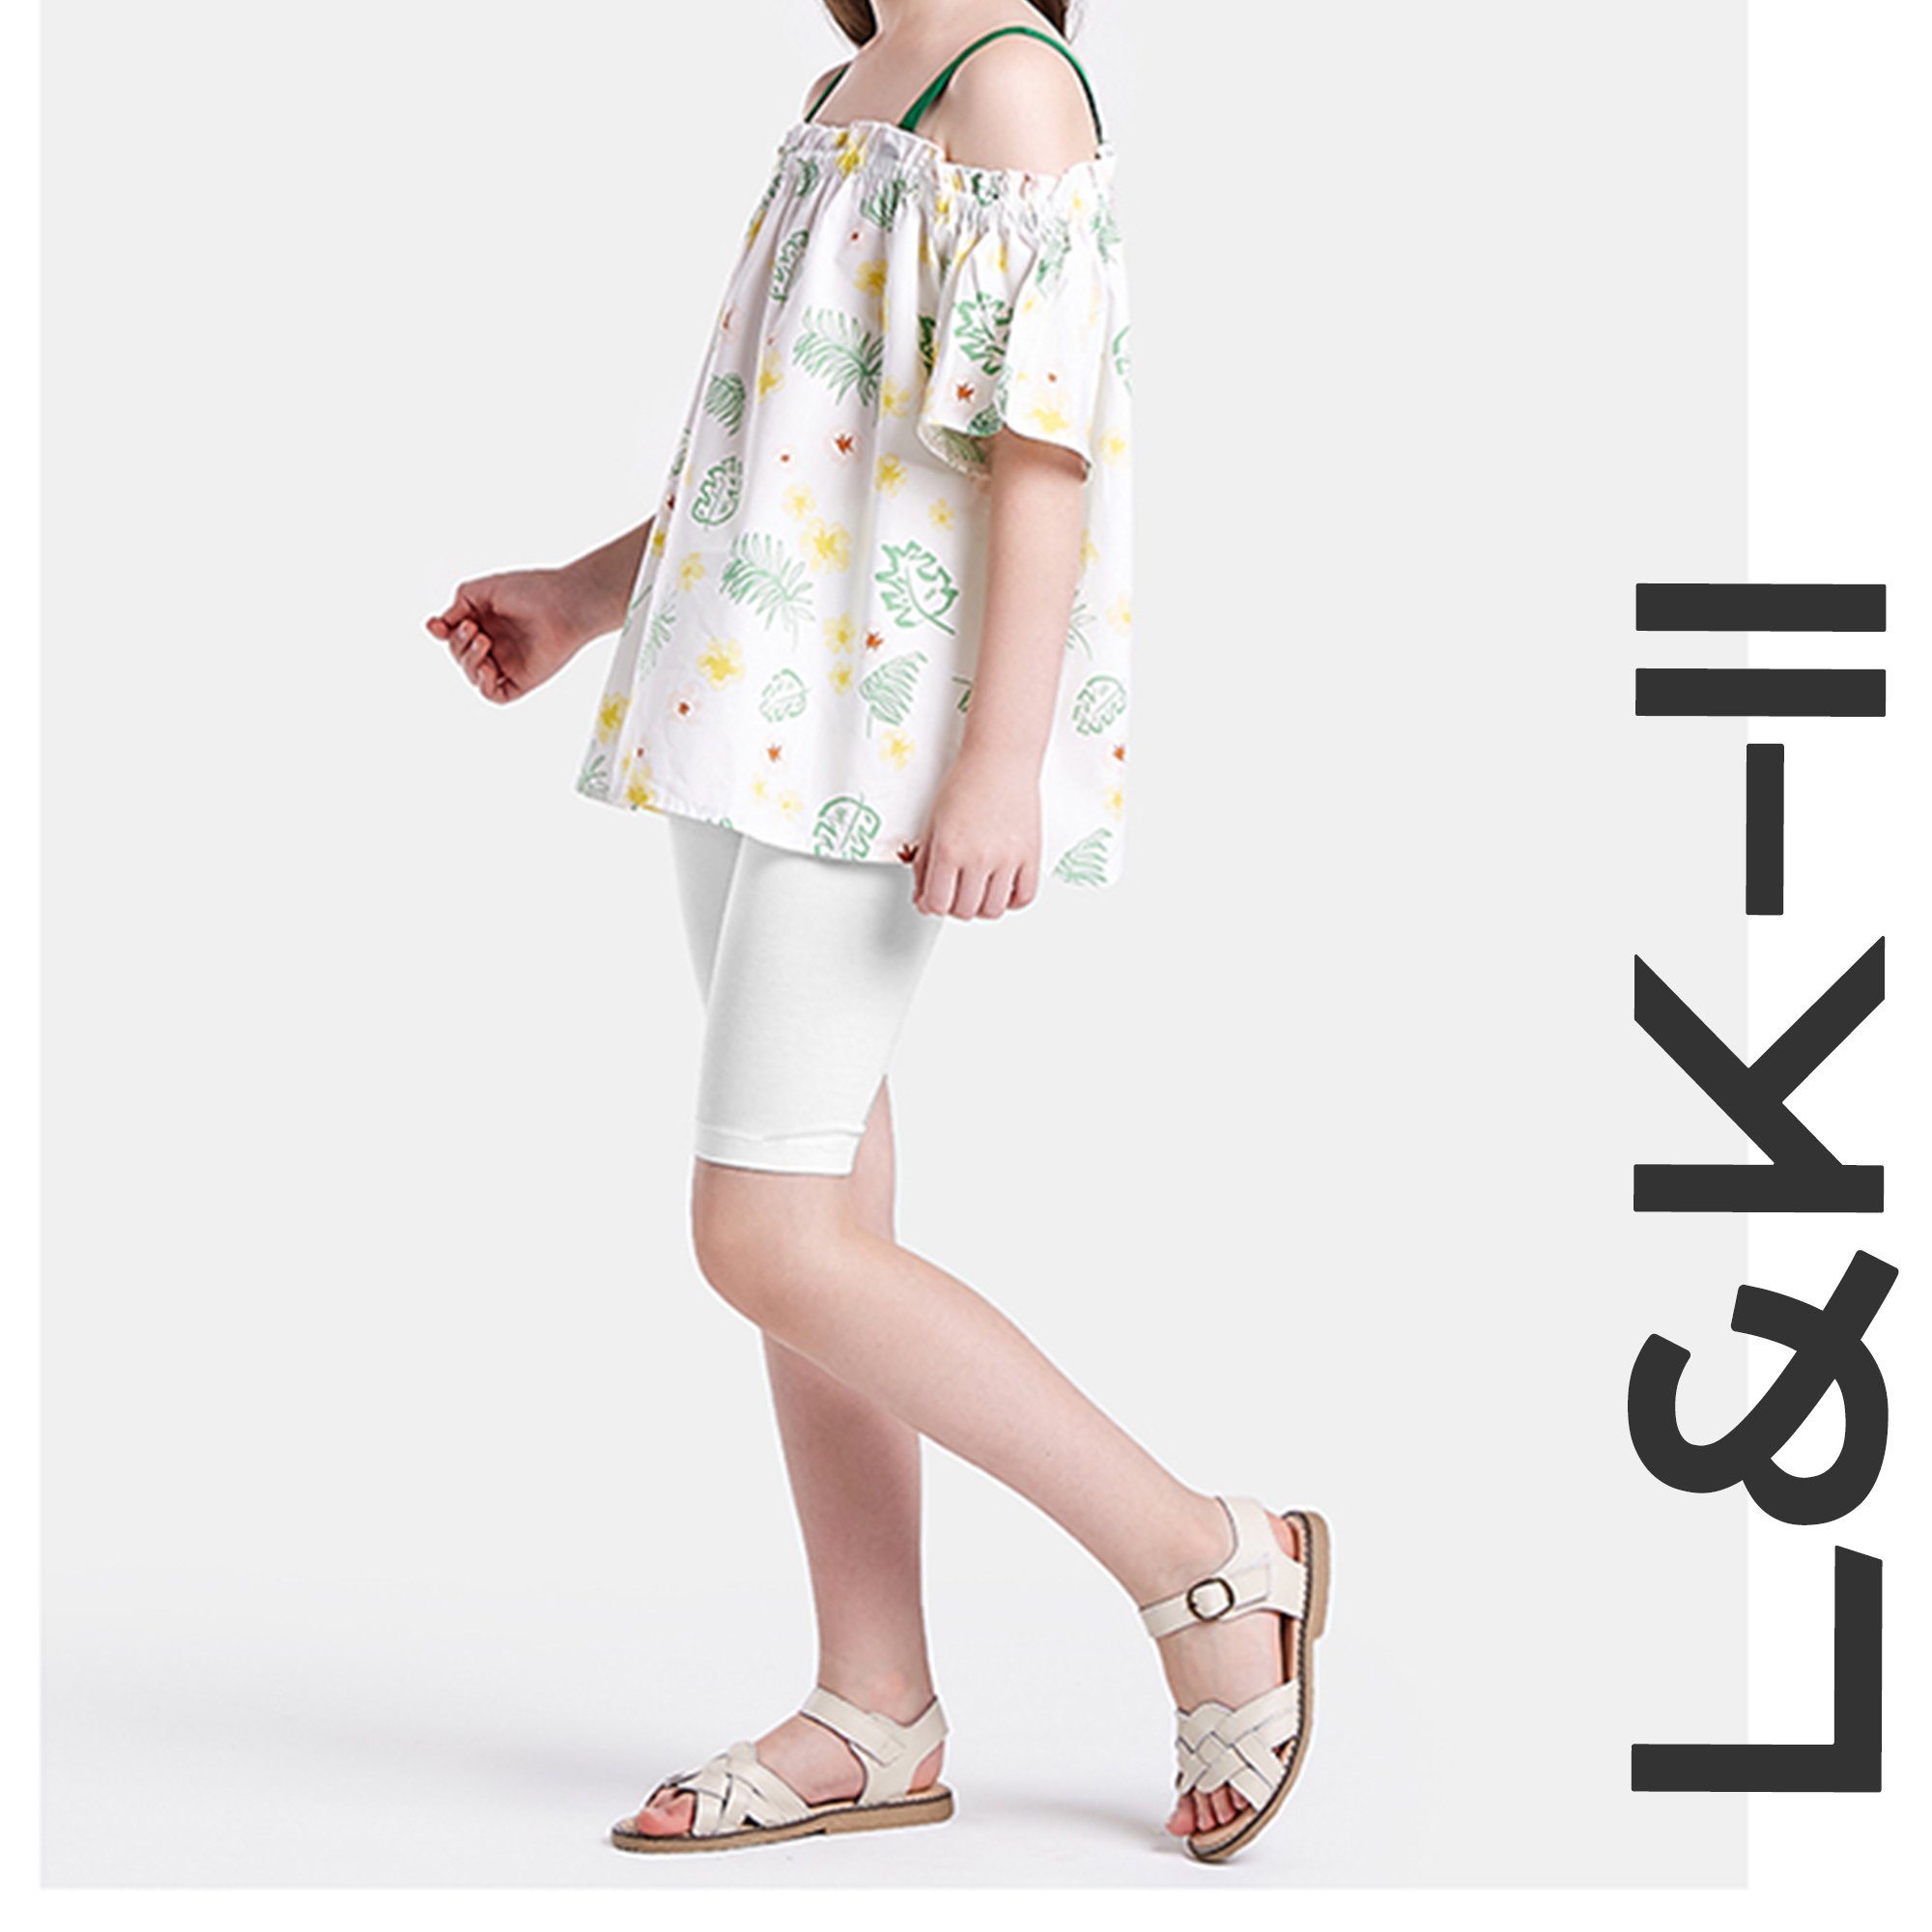 4532 (1er-Pack) Kurz Mädchen L&K-II Leggings Radlerhose Radlerhose Baumwolle aus Weiß